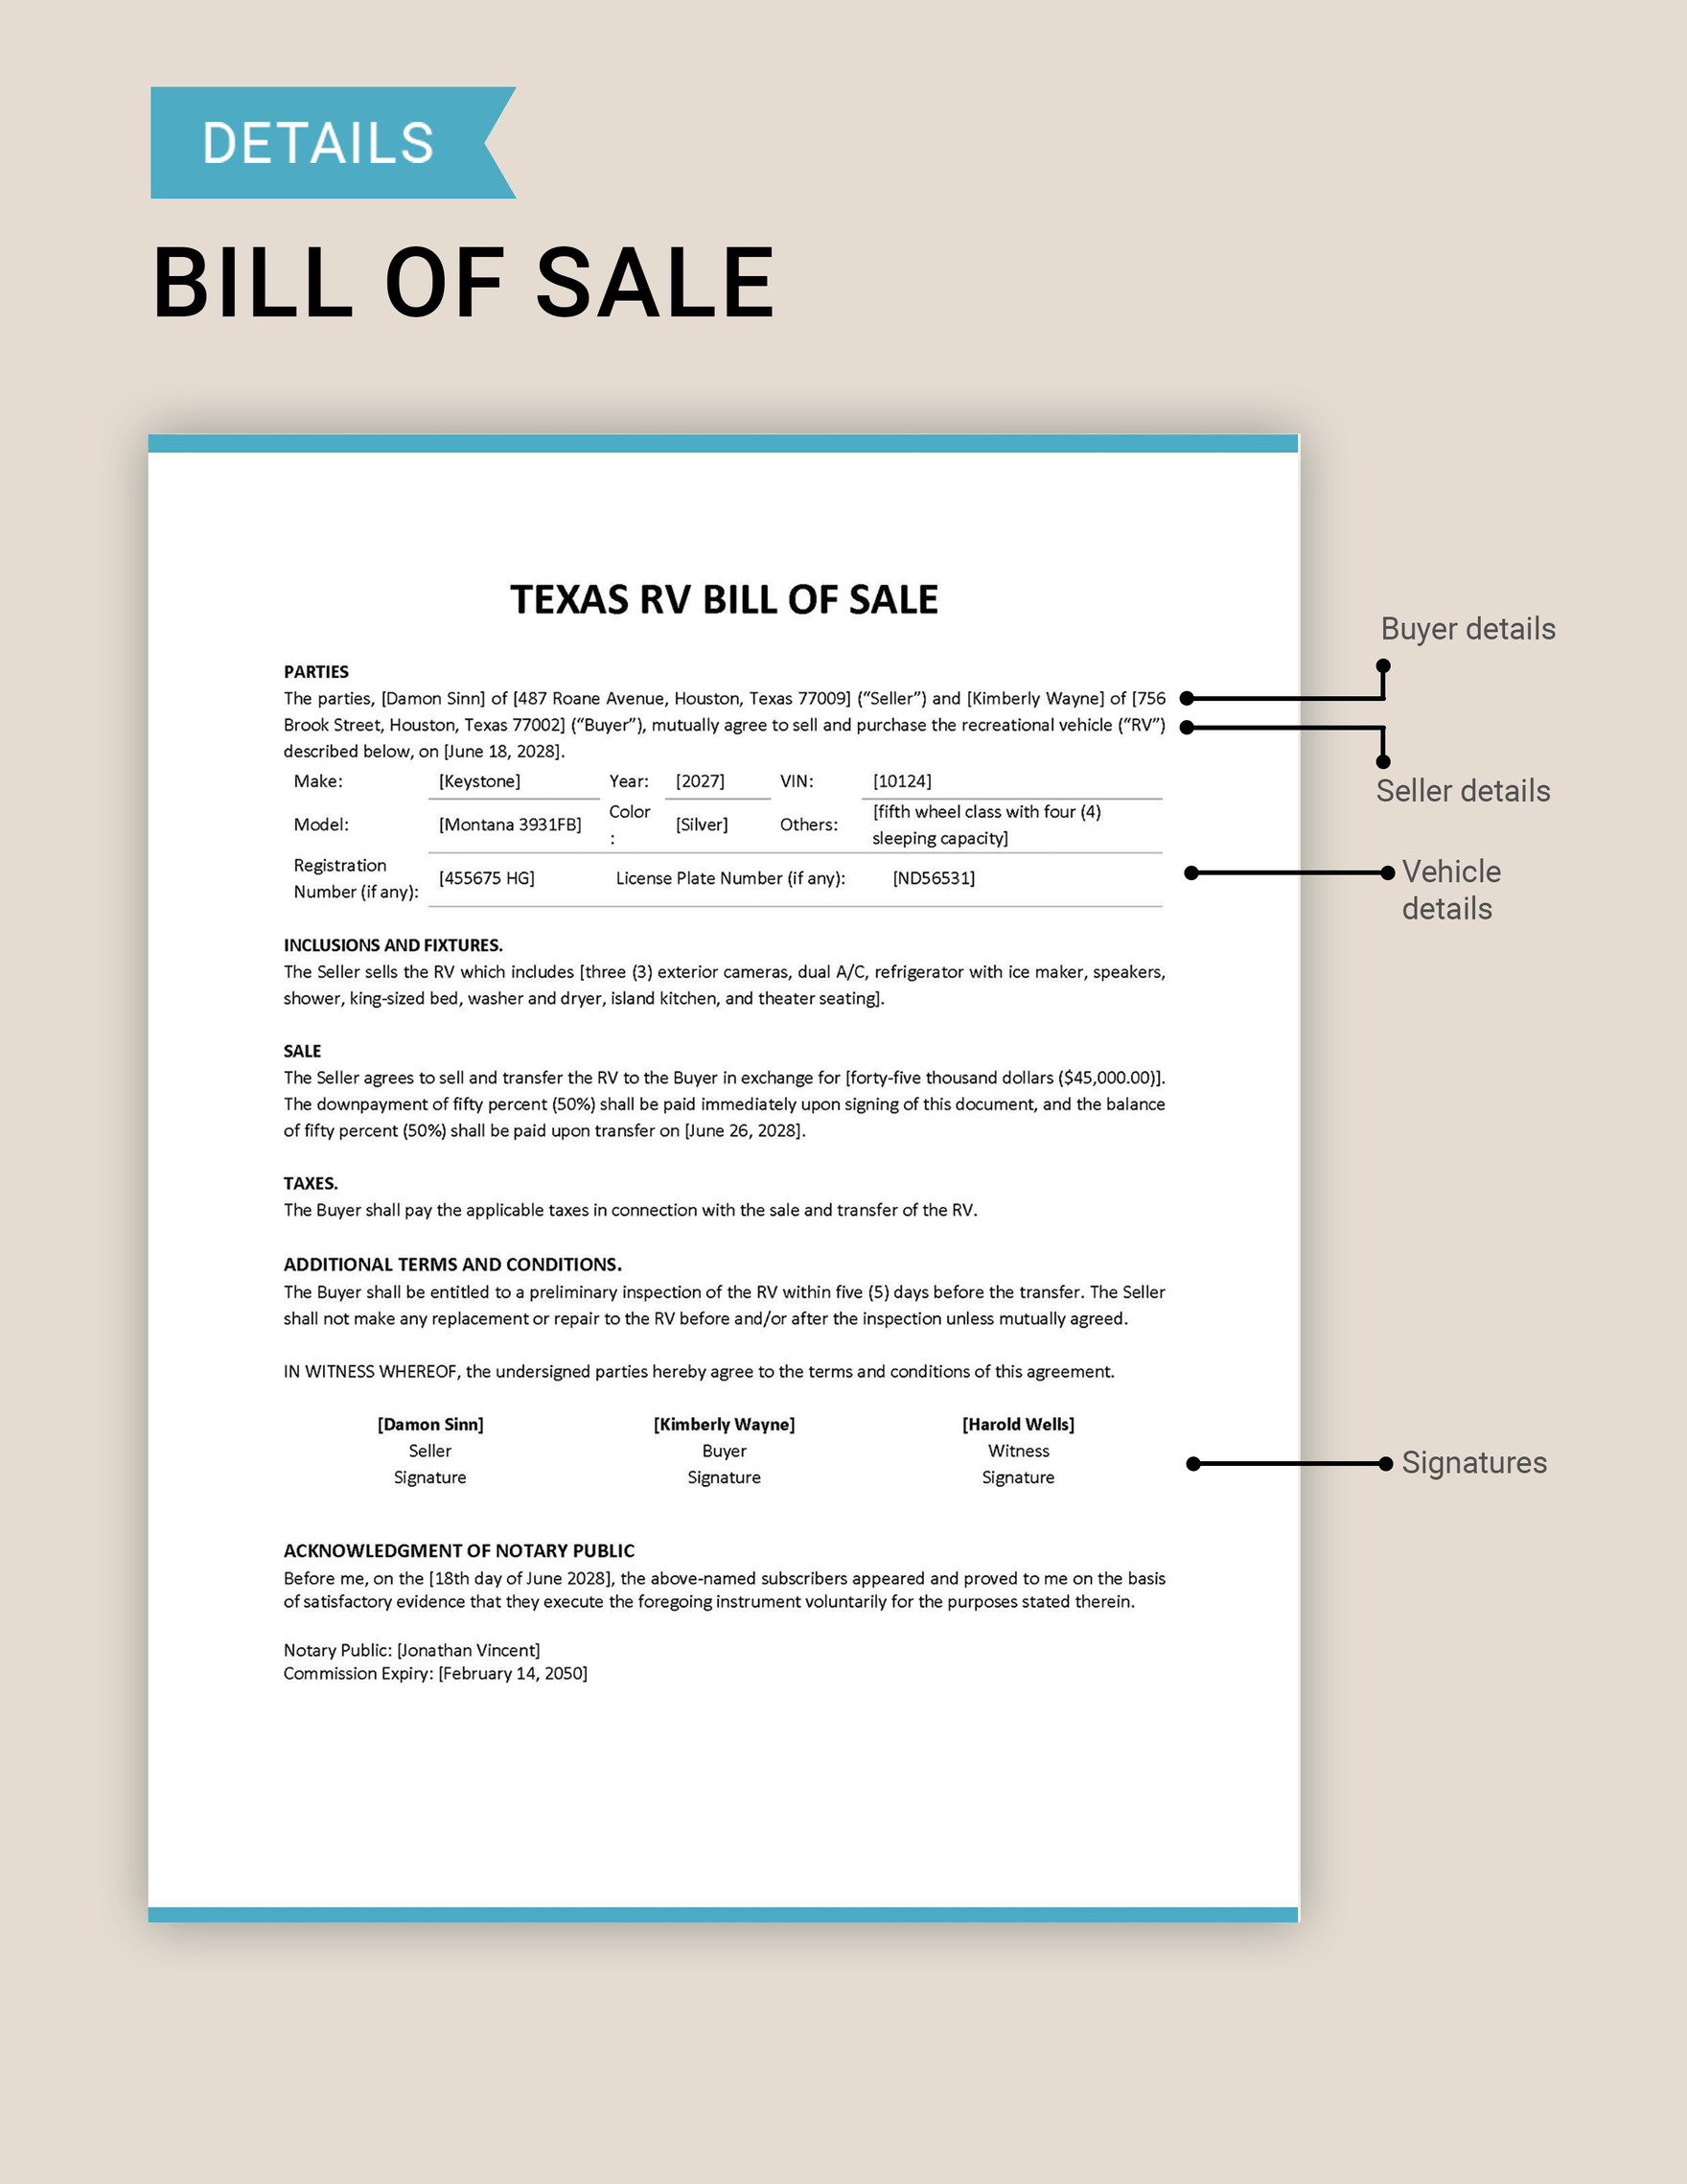 Texas RV Bill of Sale Template